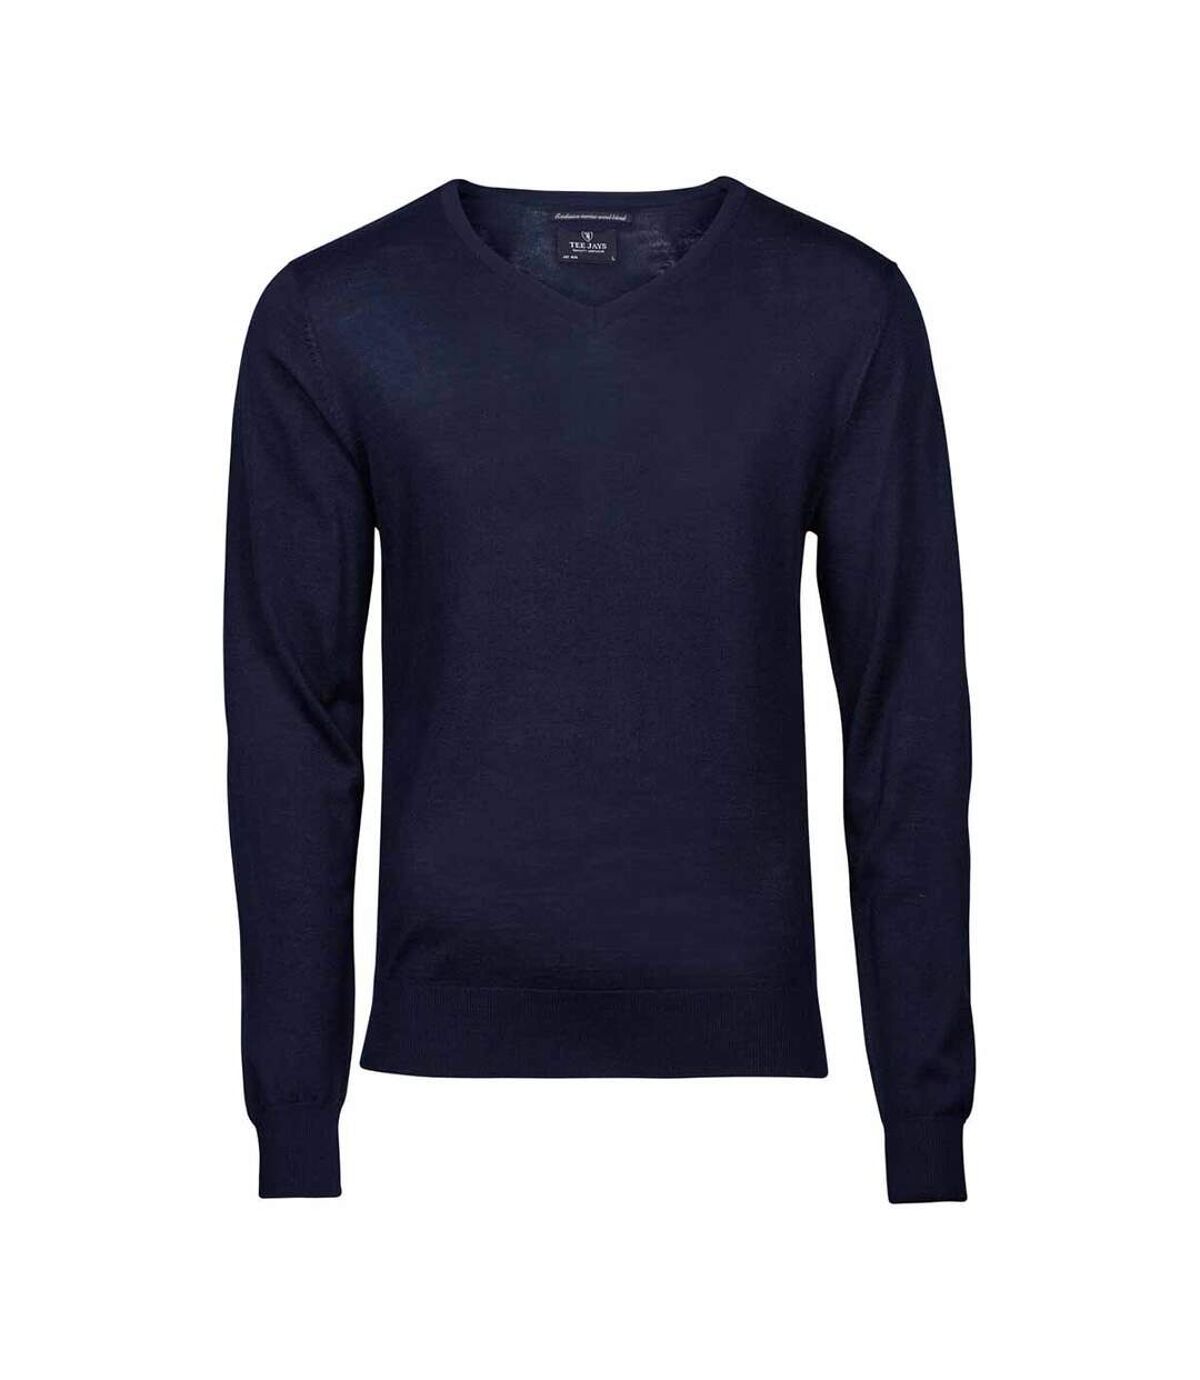 Tee Jays Mens Knitted V Neck Sweater (Navy Blue) - UTBC3828